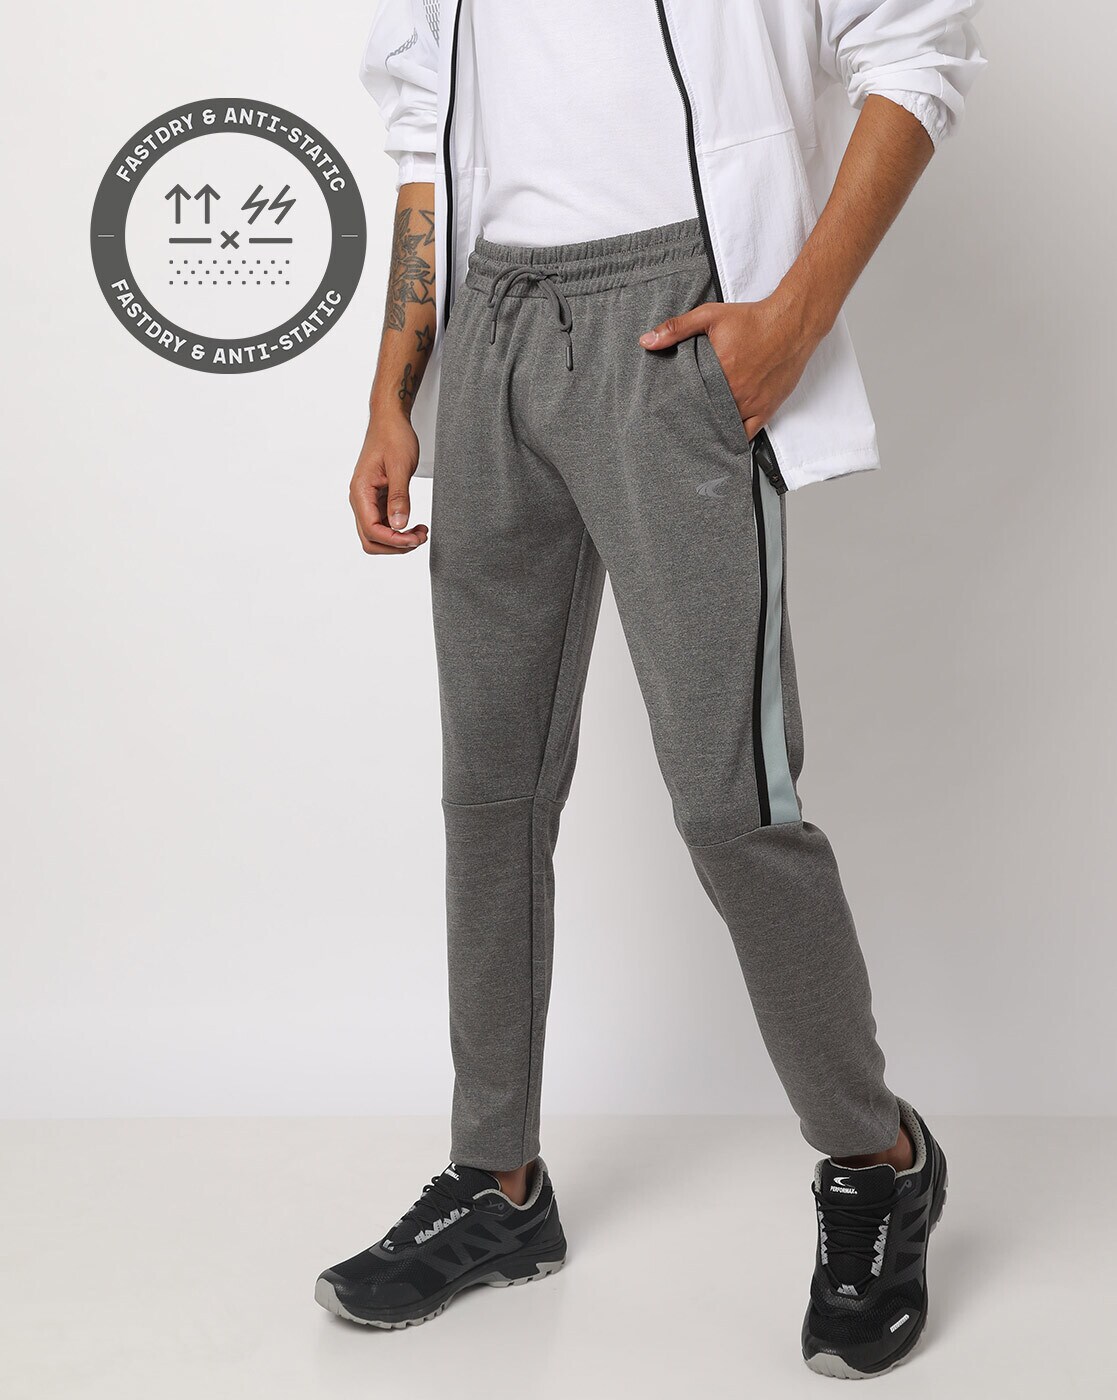 Adidas Sweatpants Mens XL Dark Grey Polyester Black 3 Stripes Baggy Fit |  eBay